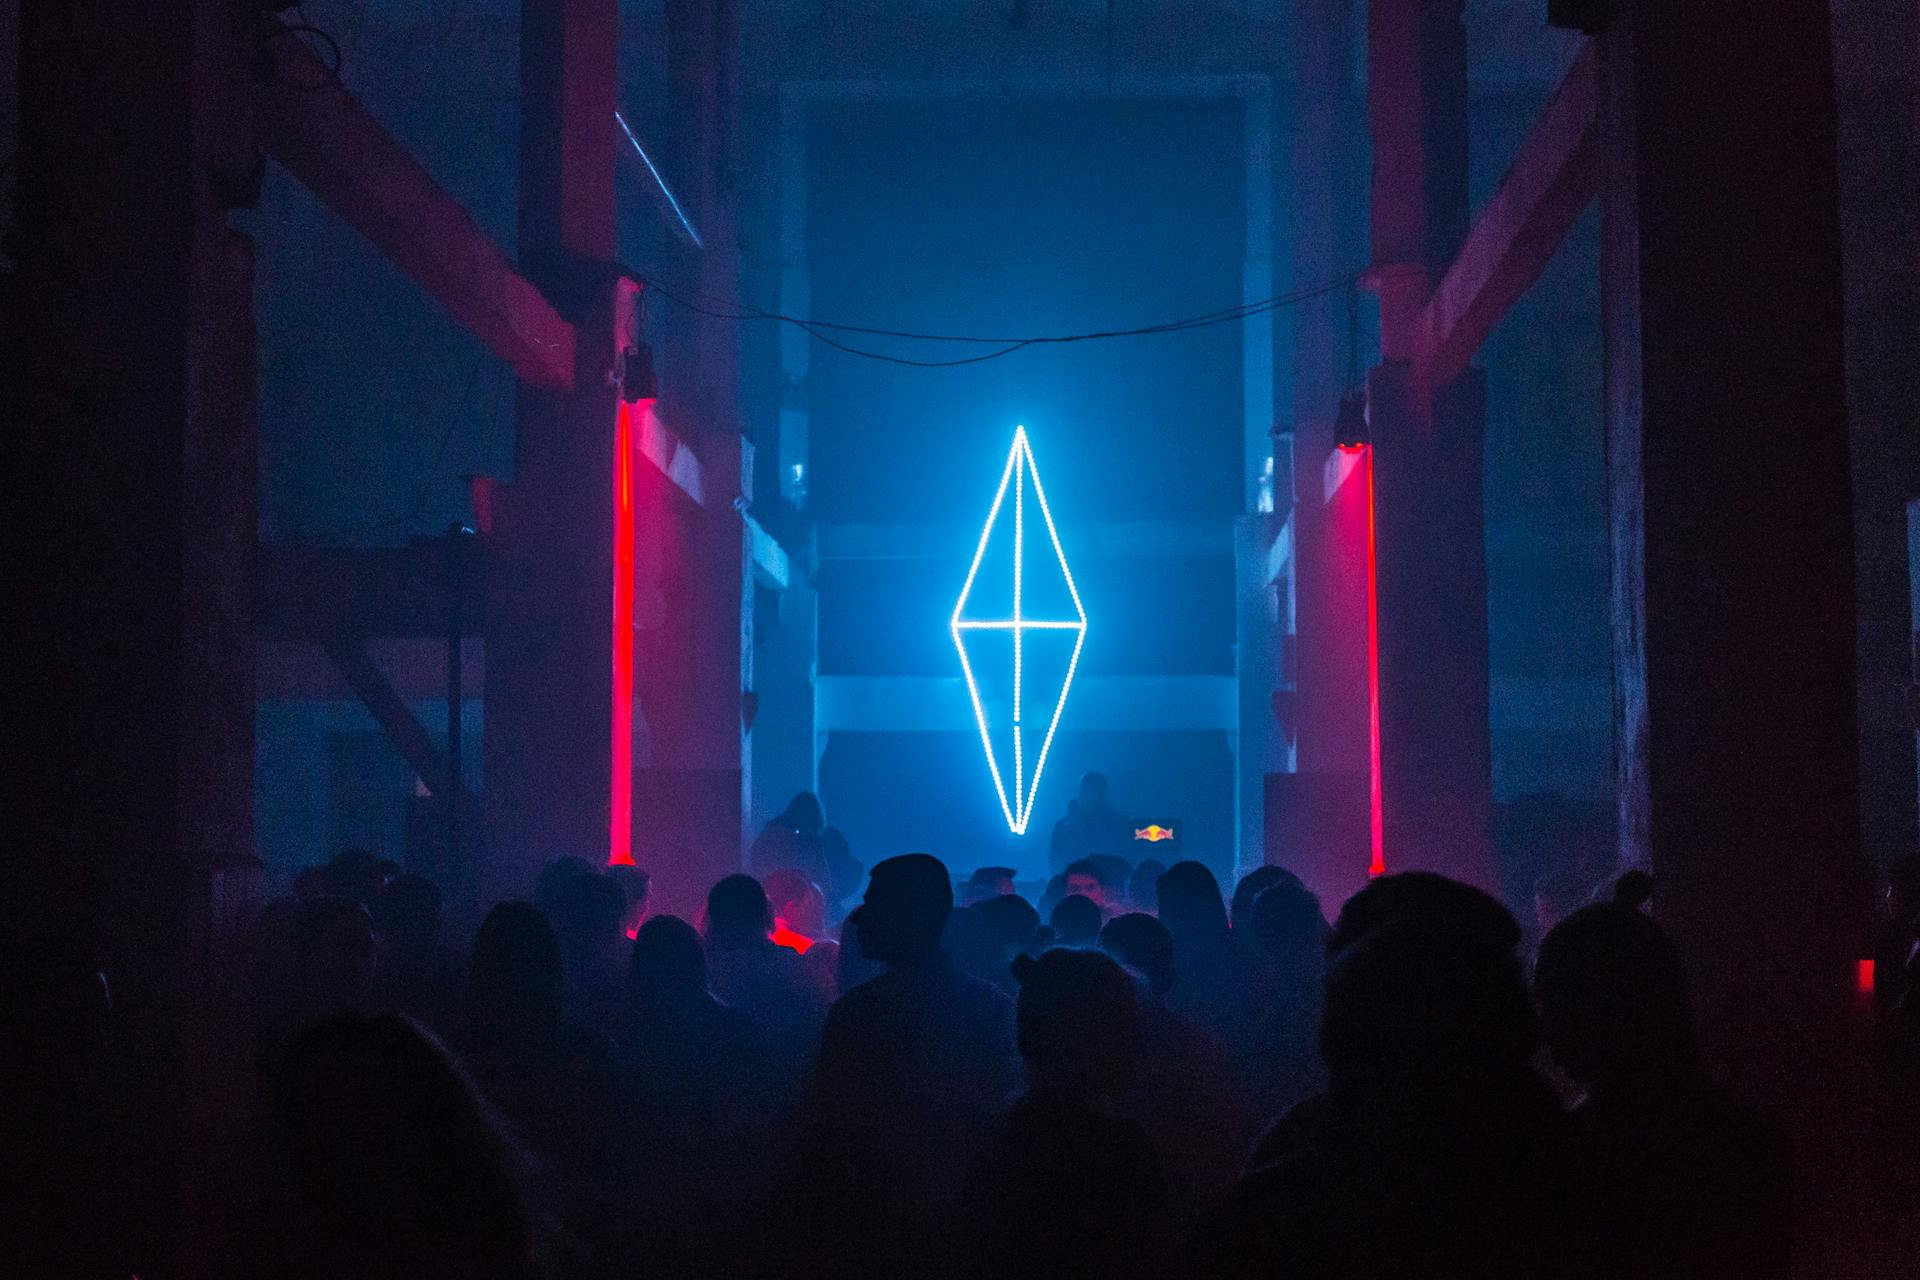 Digital art of crowd watching a glowing geometric shape